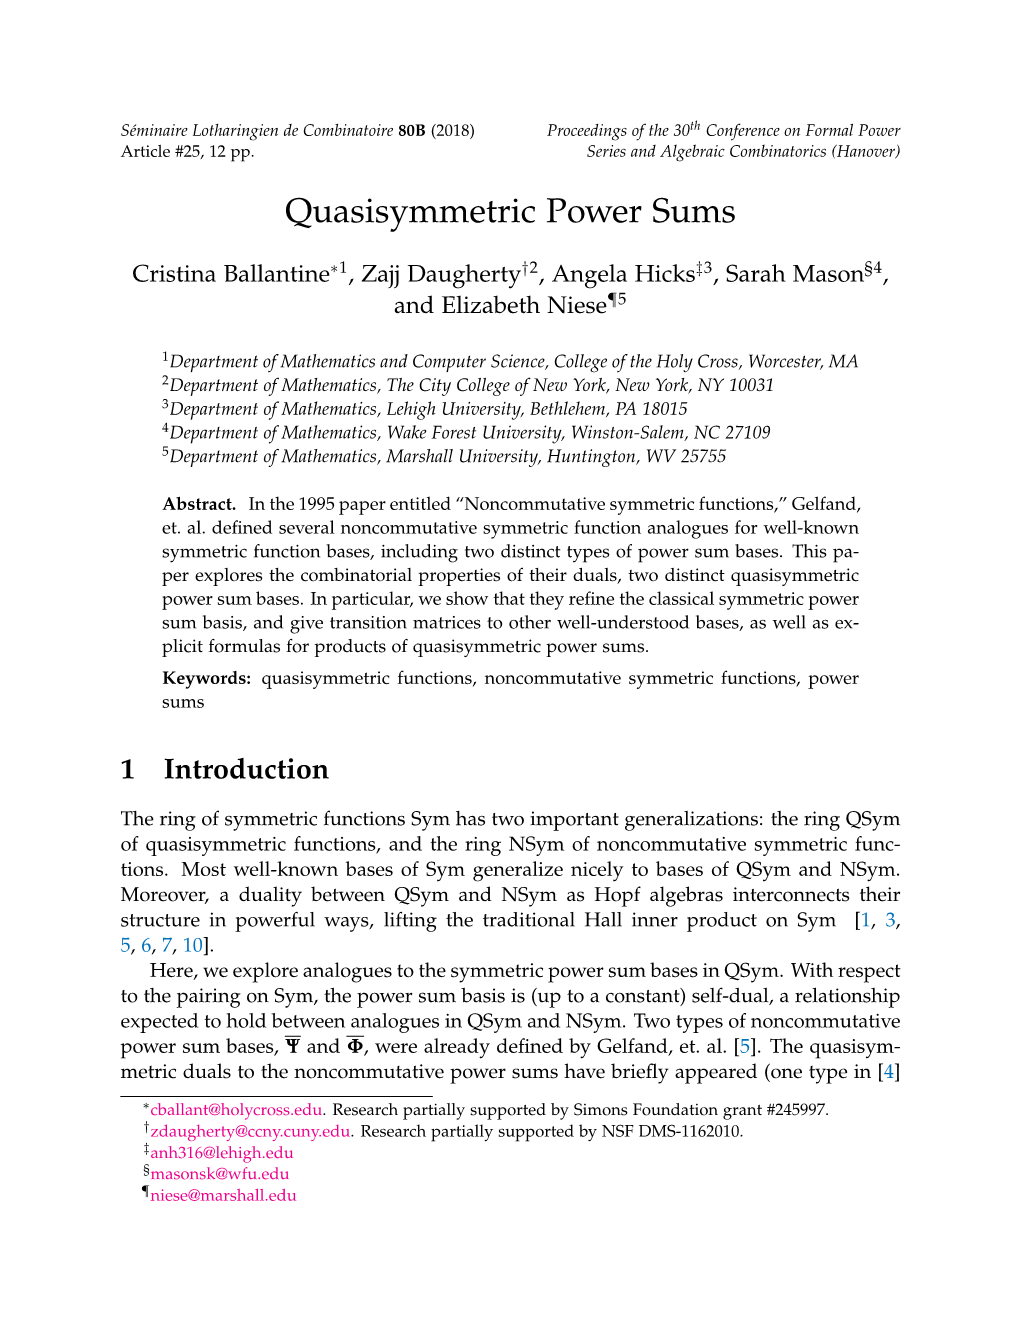 Quasisymmetric Power Sums